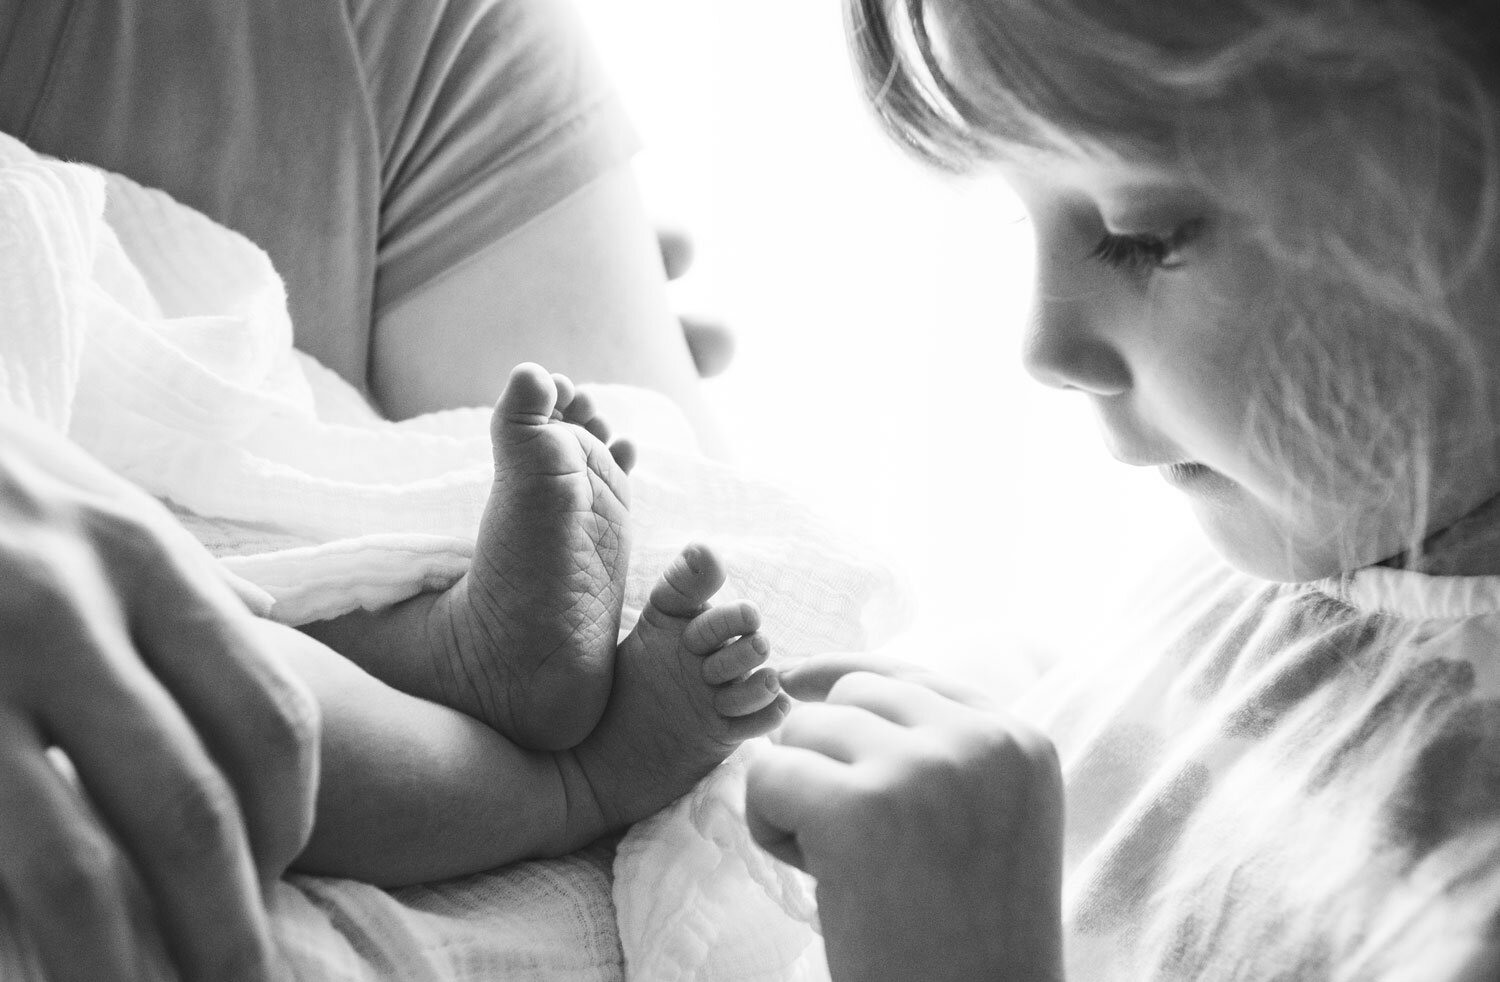 Little girl touching her newborn baby sibling's toe